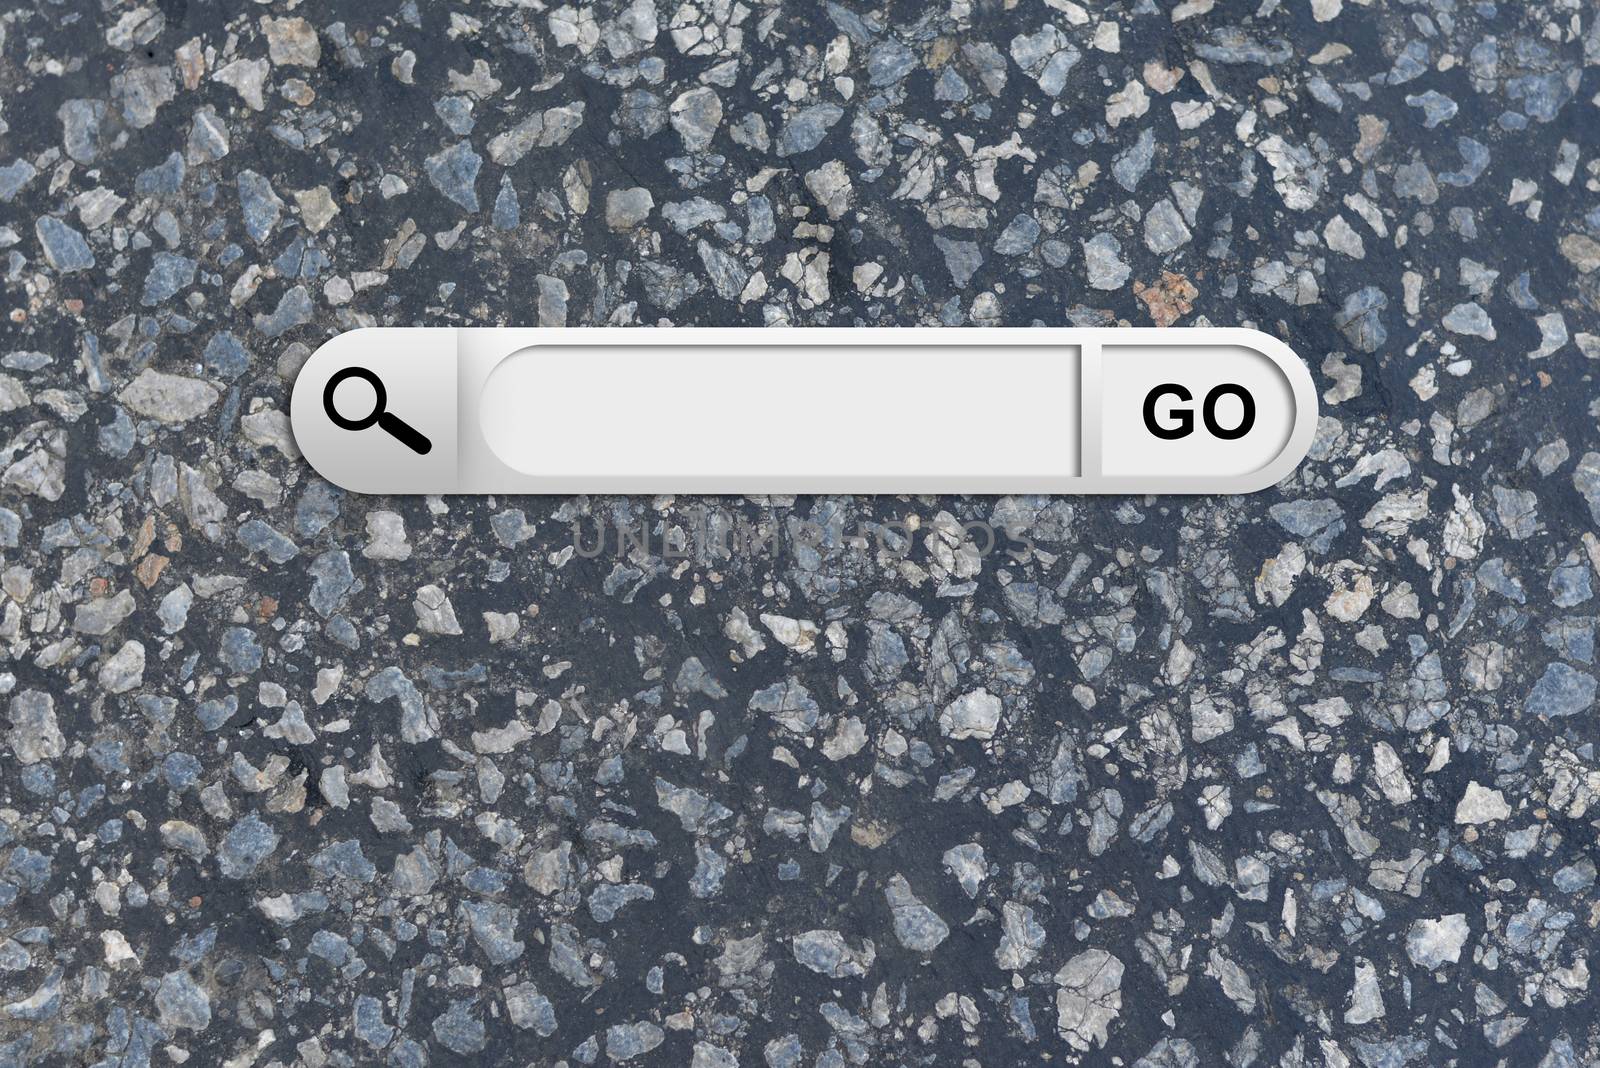 Search bar in browser. Dark asphalt surface on background